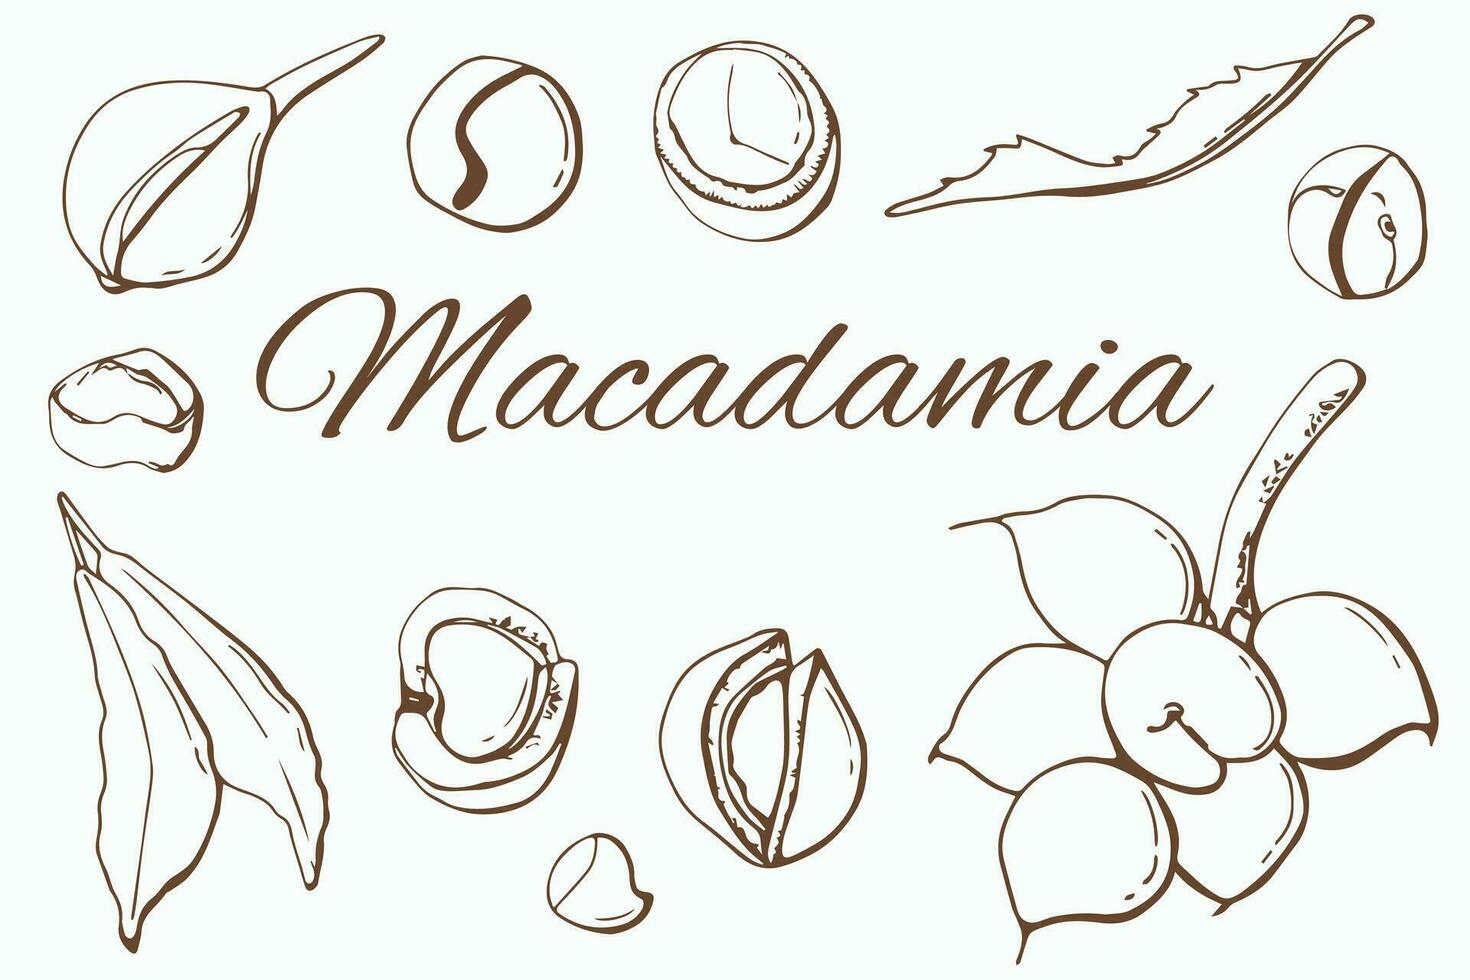 Macadamia nut graph set. White background, isolate. Line art. vector